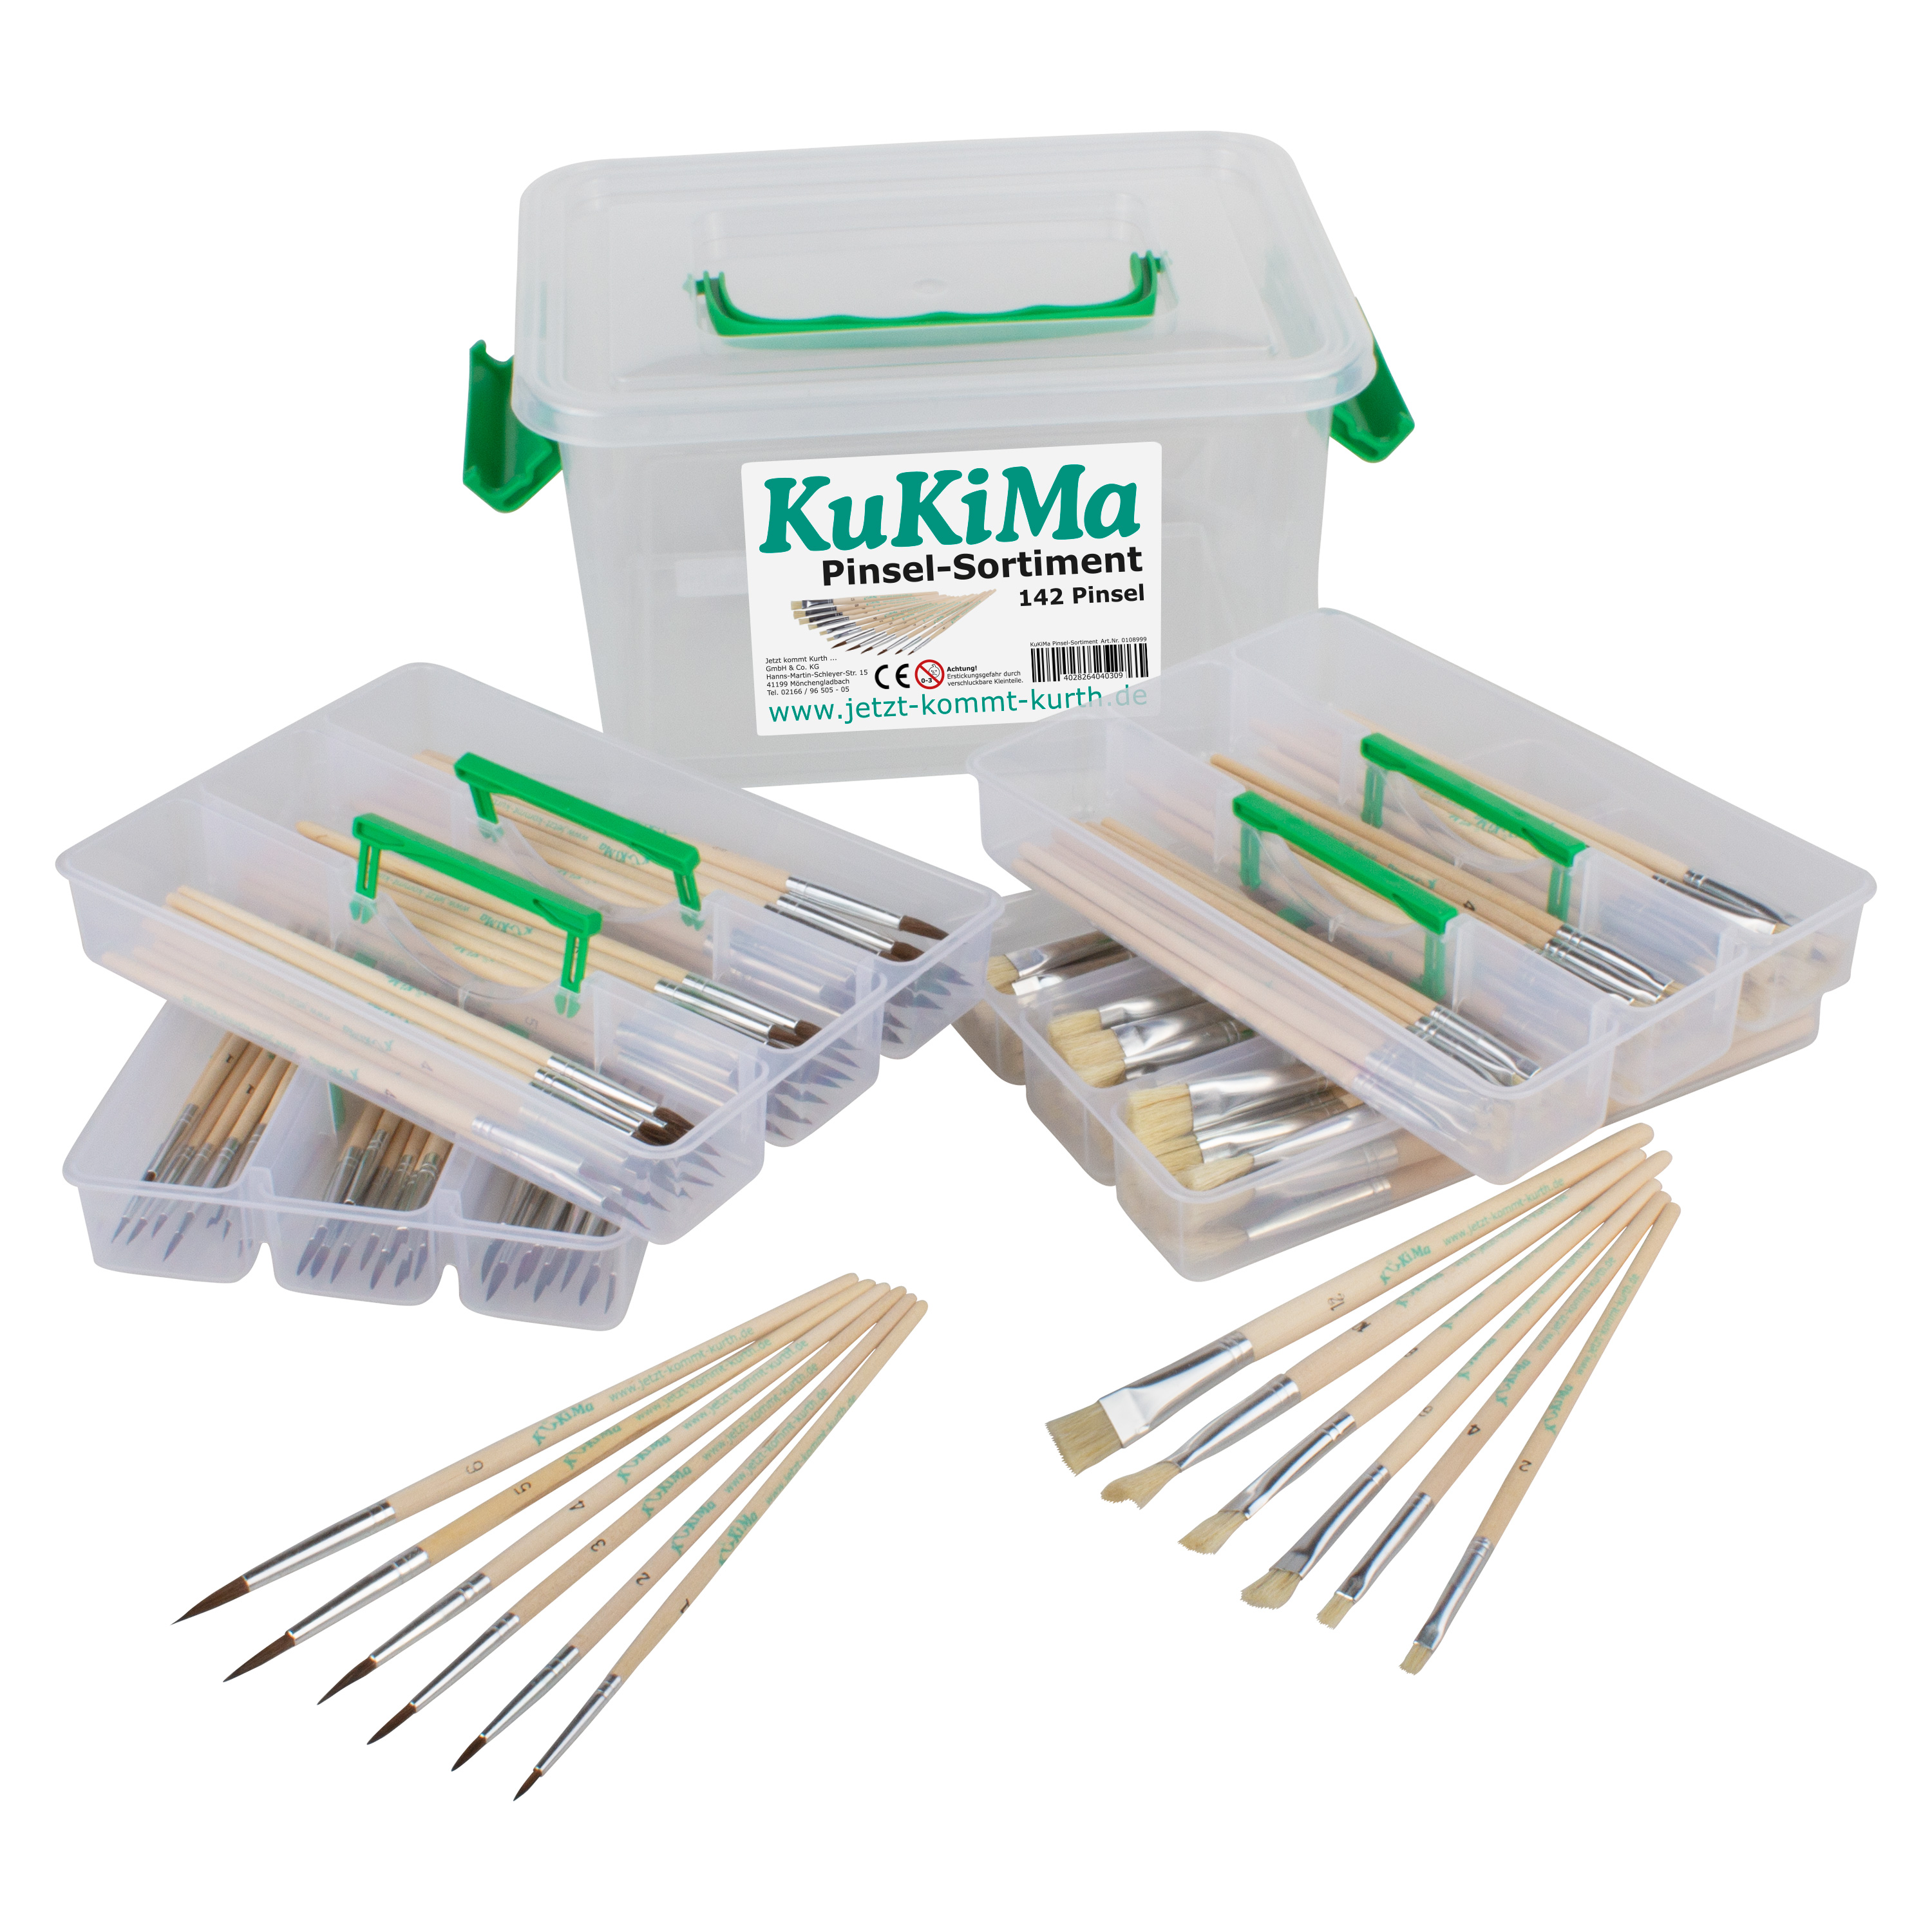 KuKiMa Pinsel-Sortiment, 142 Pinsel inkl. Box